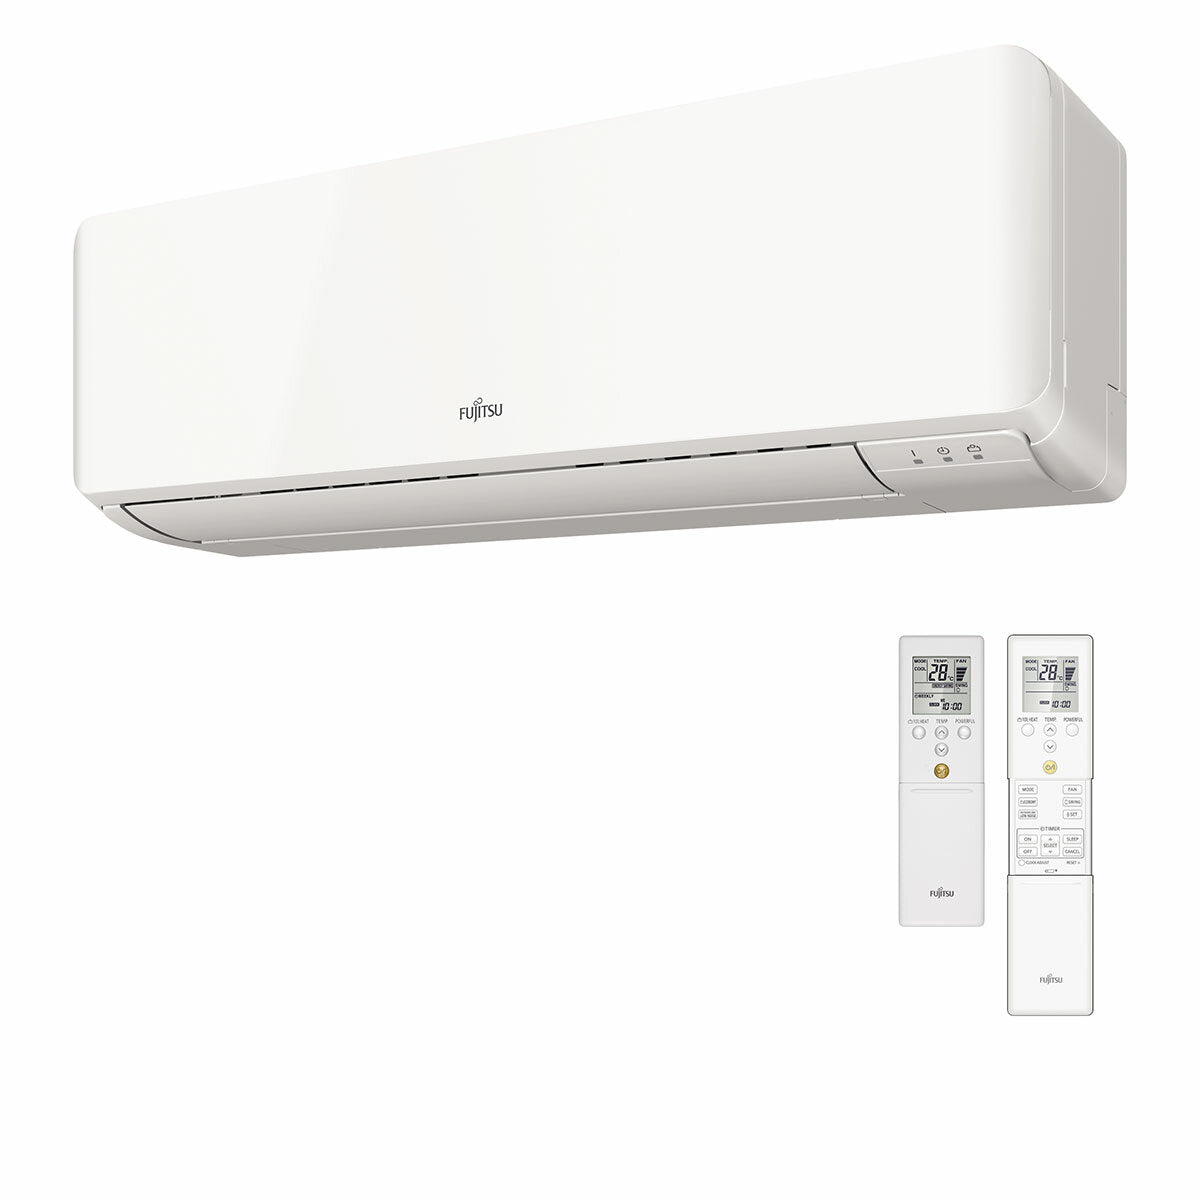 Fujitsu air conditioner KM WiFi Series trial split 7000+7000+7000 BTU inverter A+++ external unit 5.4 kW